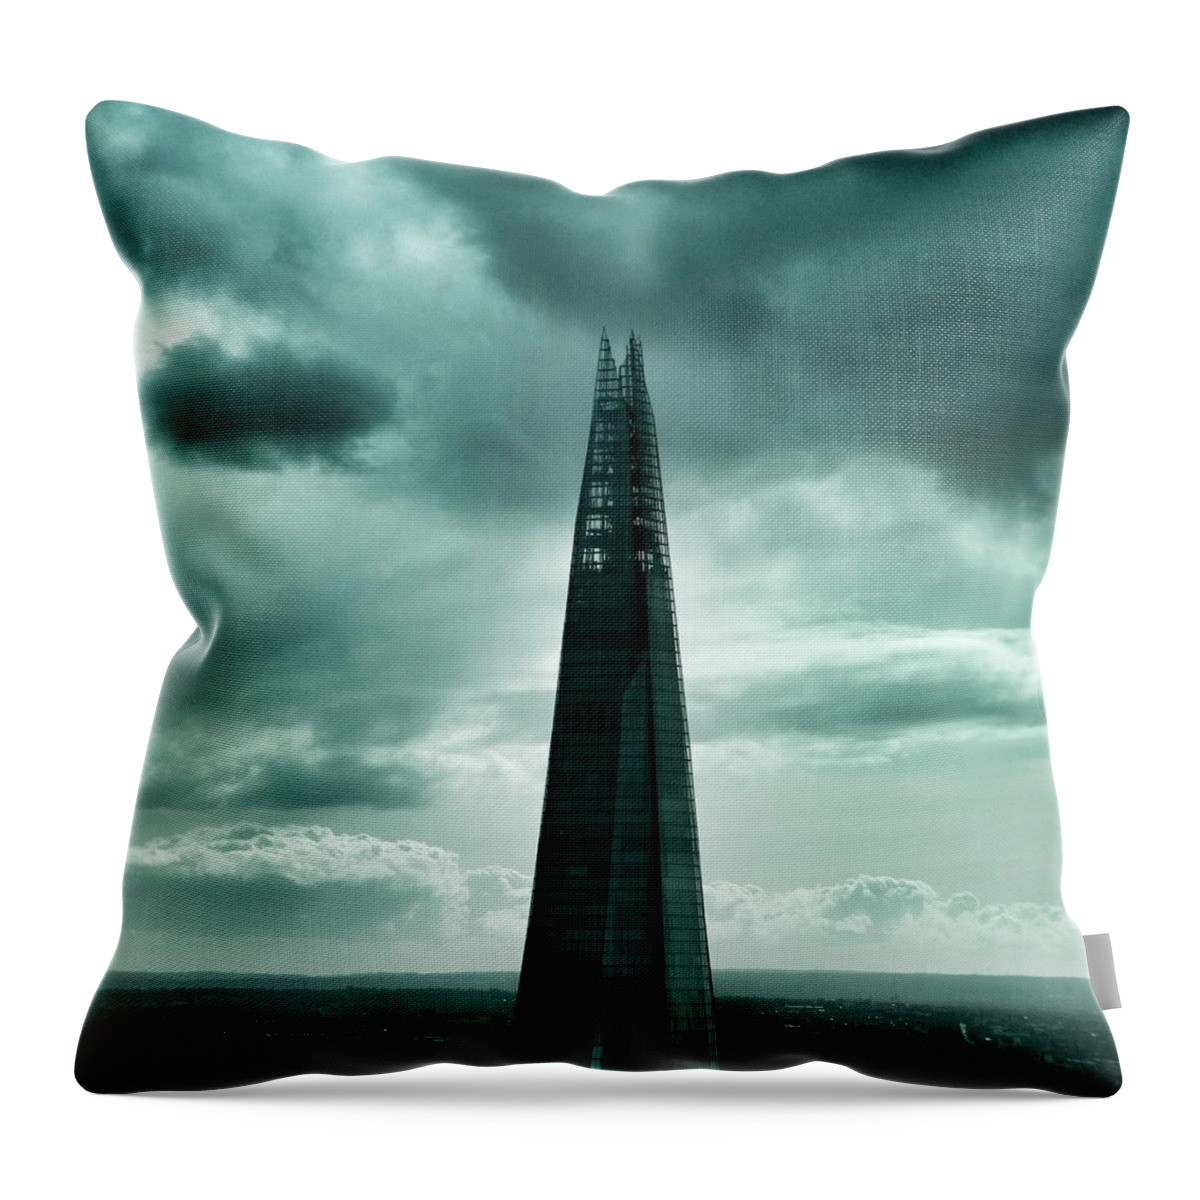 London Throw Pillow featuring the photograph The Shard #4 by Joshua Miranda